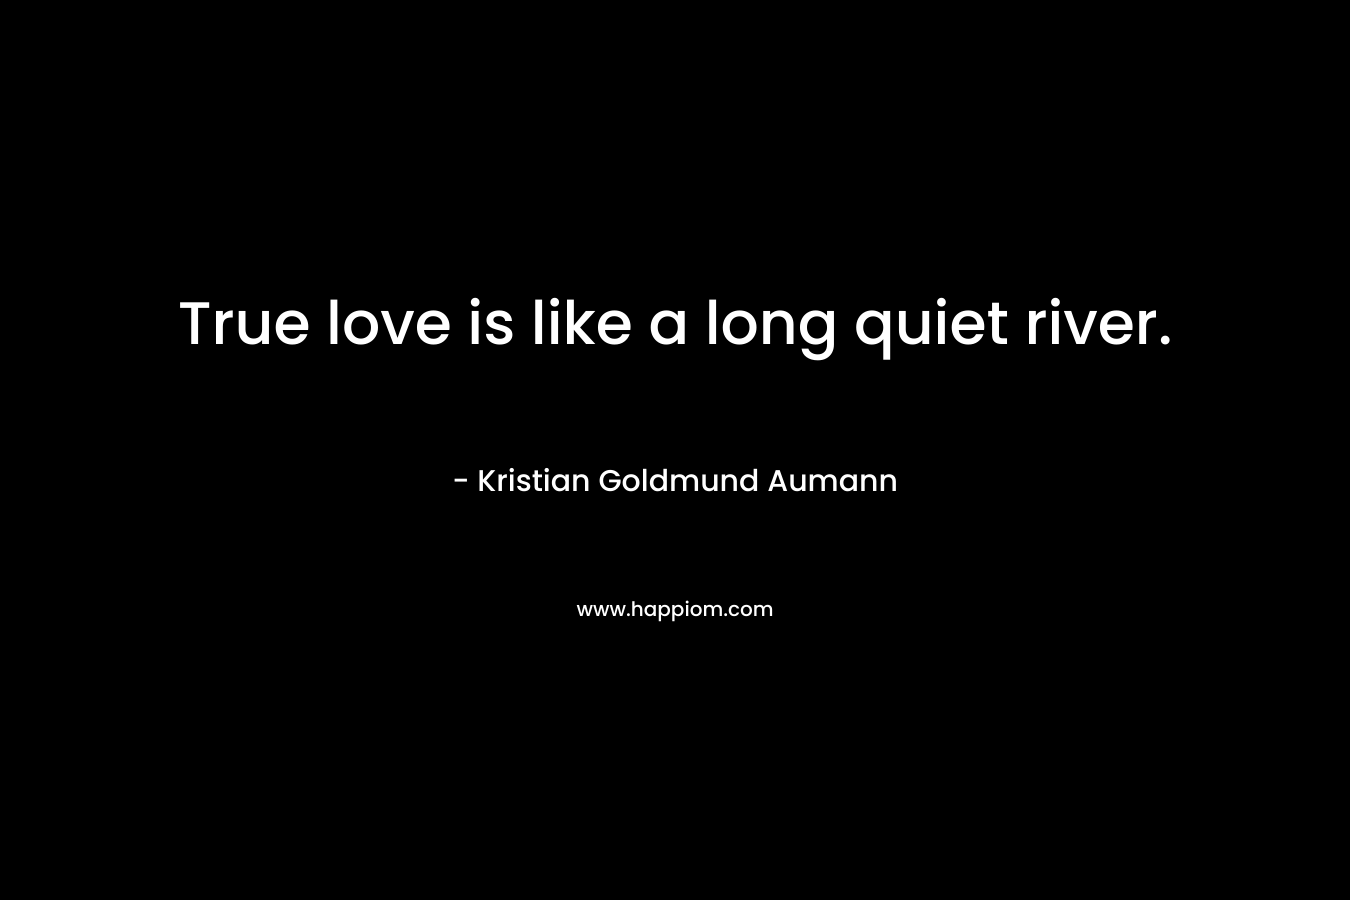 True love is like a long quiet river.